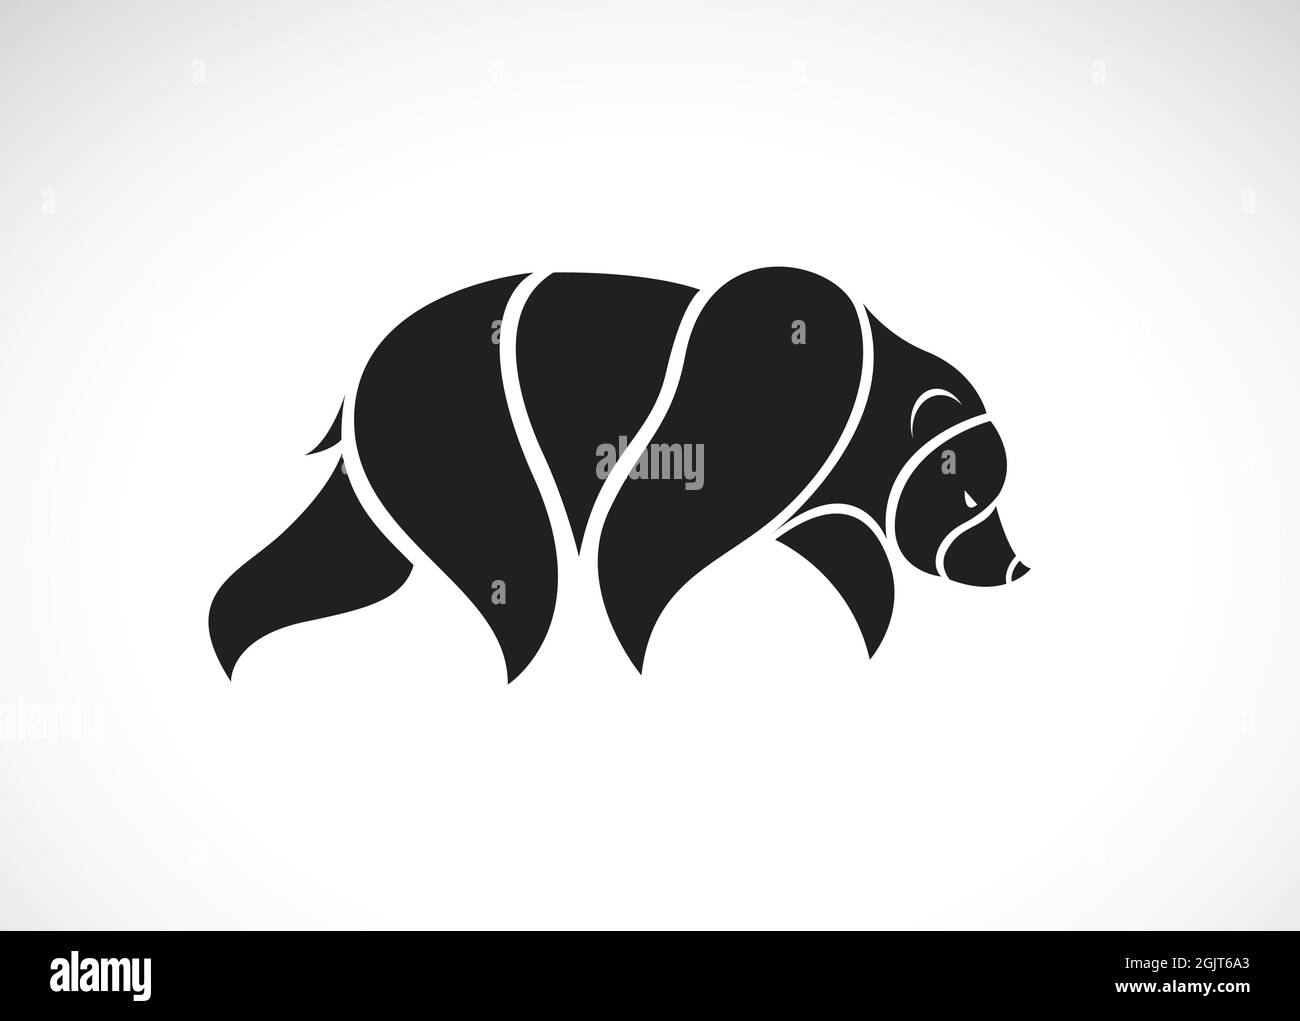 Vector of bear design on white background. Wild Animals. Bear logo or icon. Easy editable layered vector illustration. Stock Vector